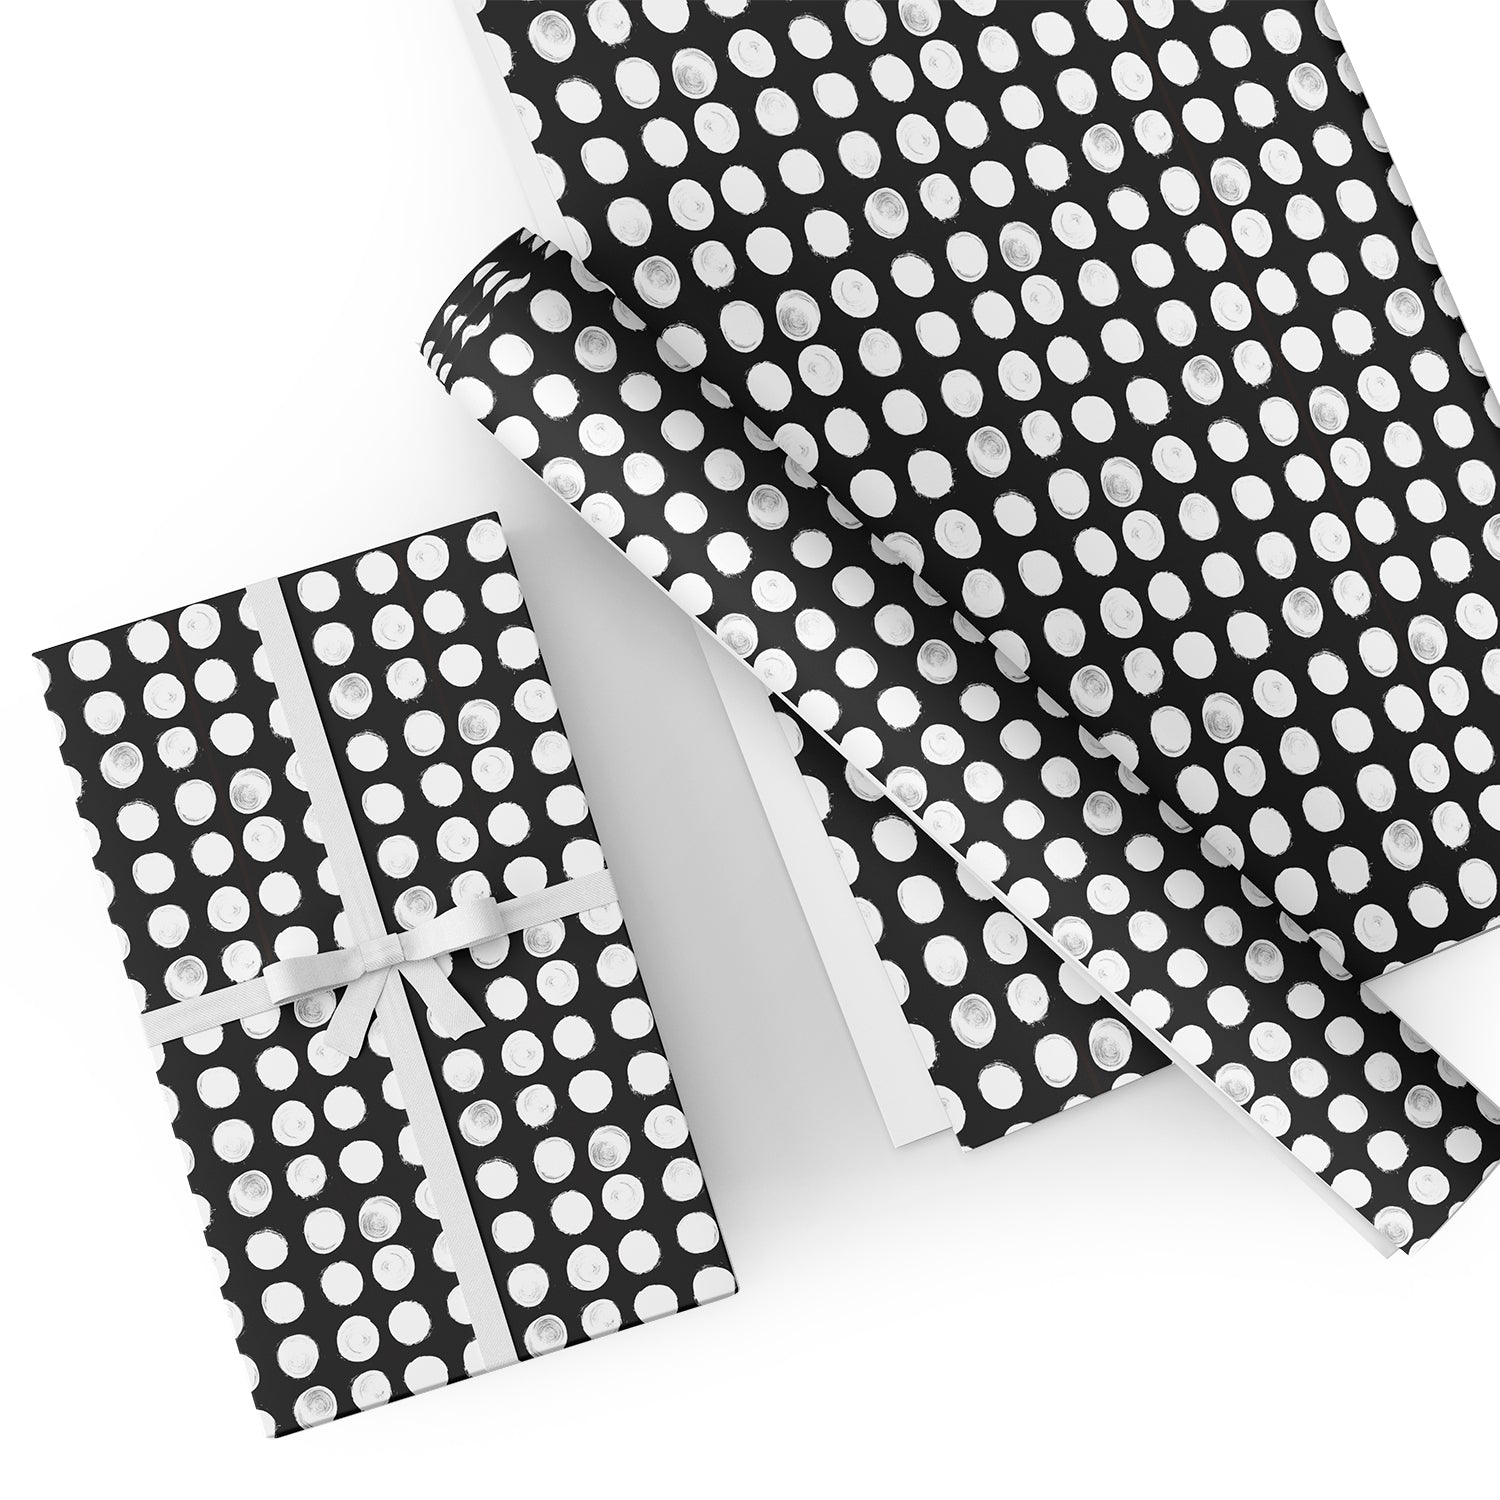 Black and White Polka Dot Flat Wrapping Paper Sheet Wholesale Wraphaholic